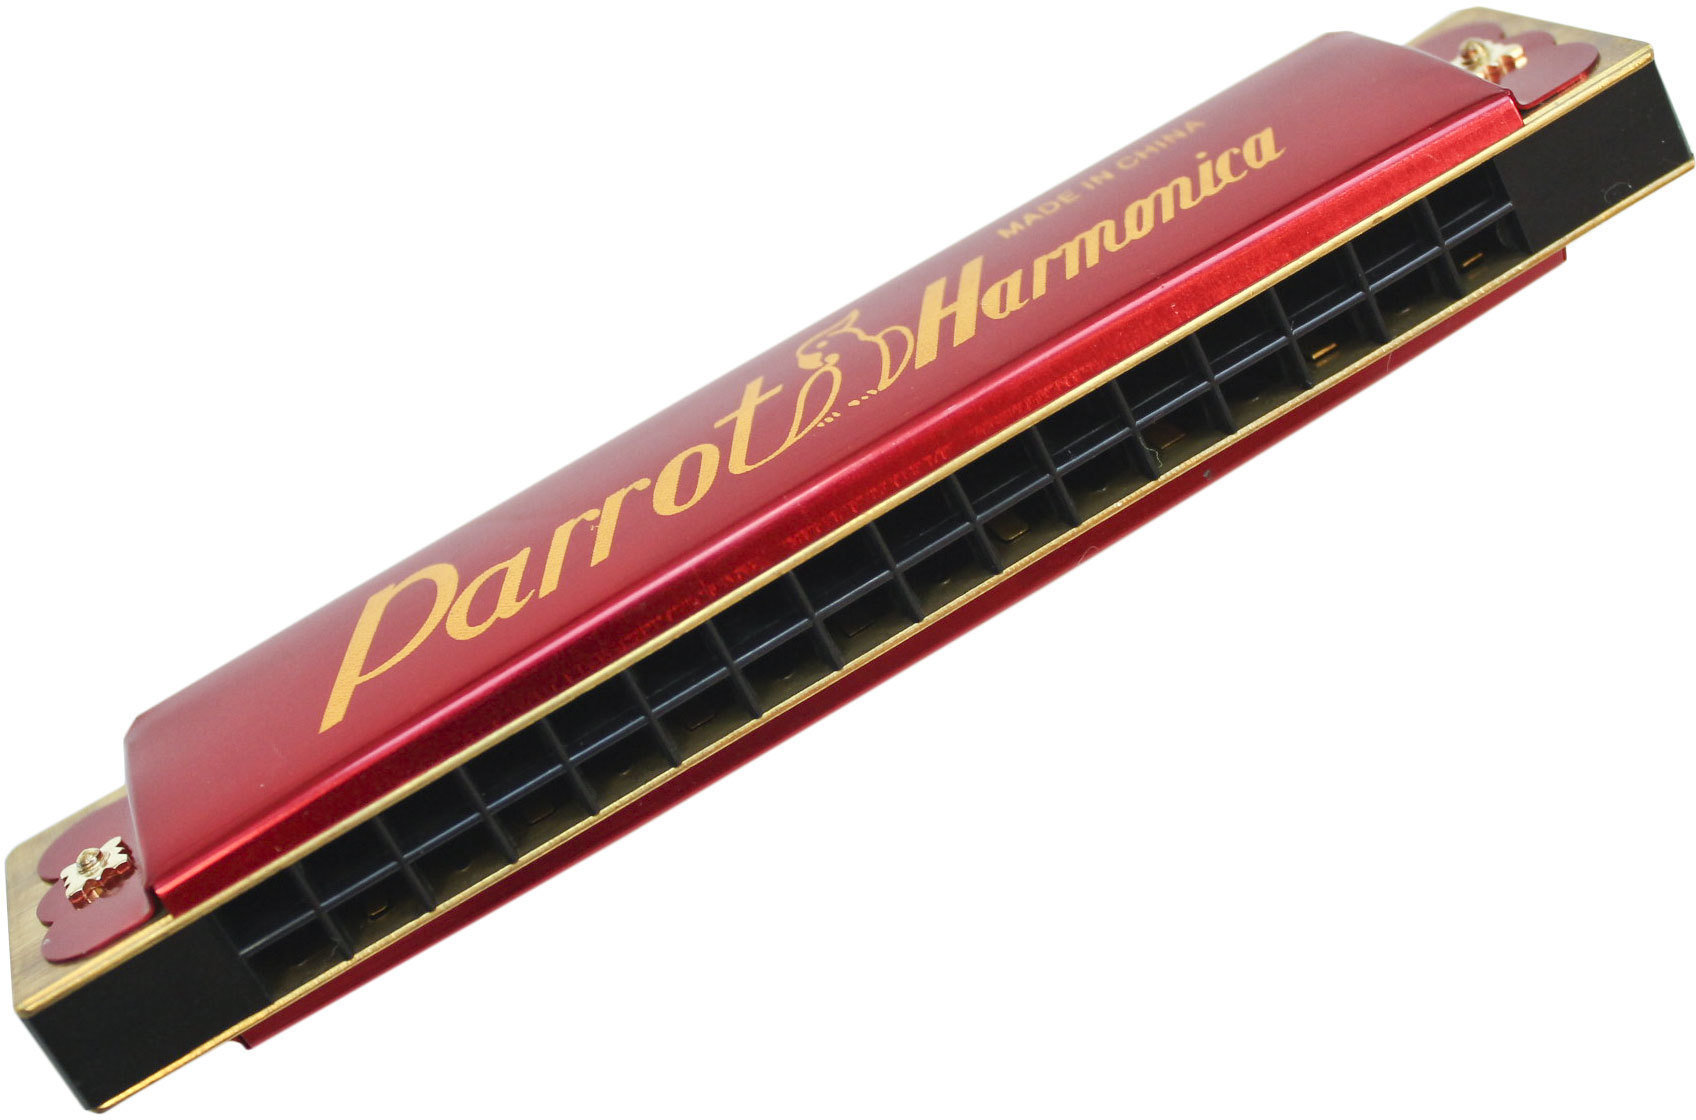 Diatonic harmonica Parrot HD 16 1 D